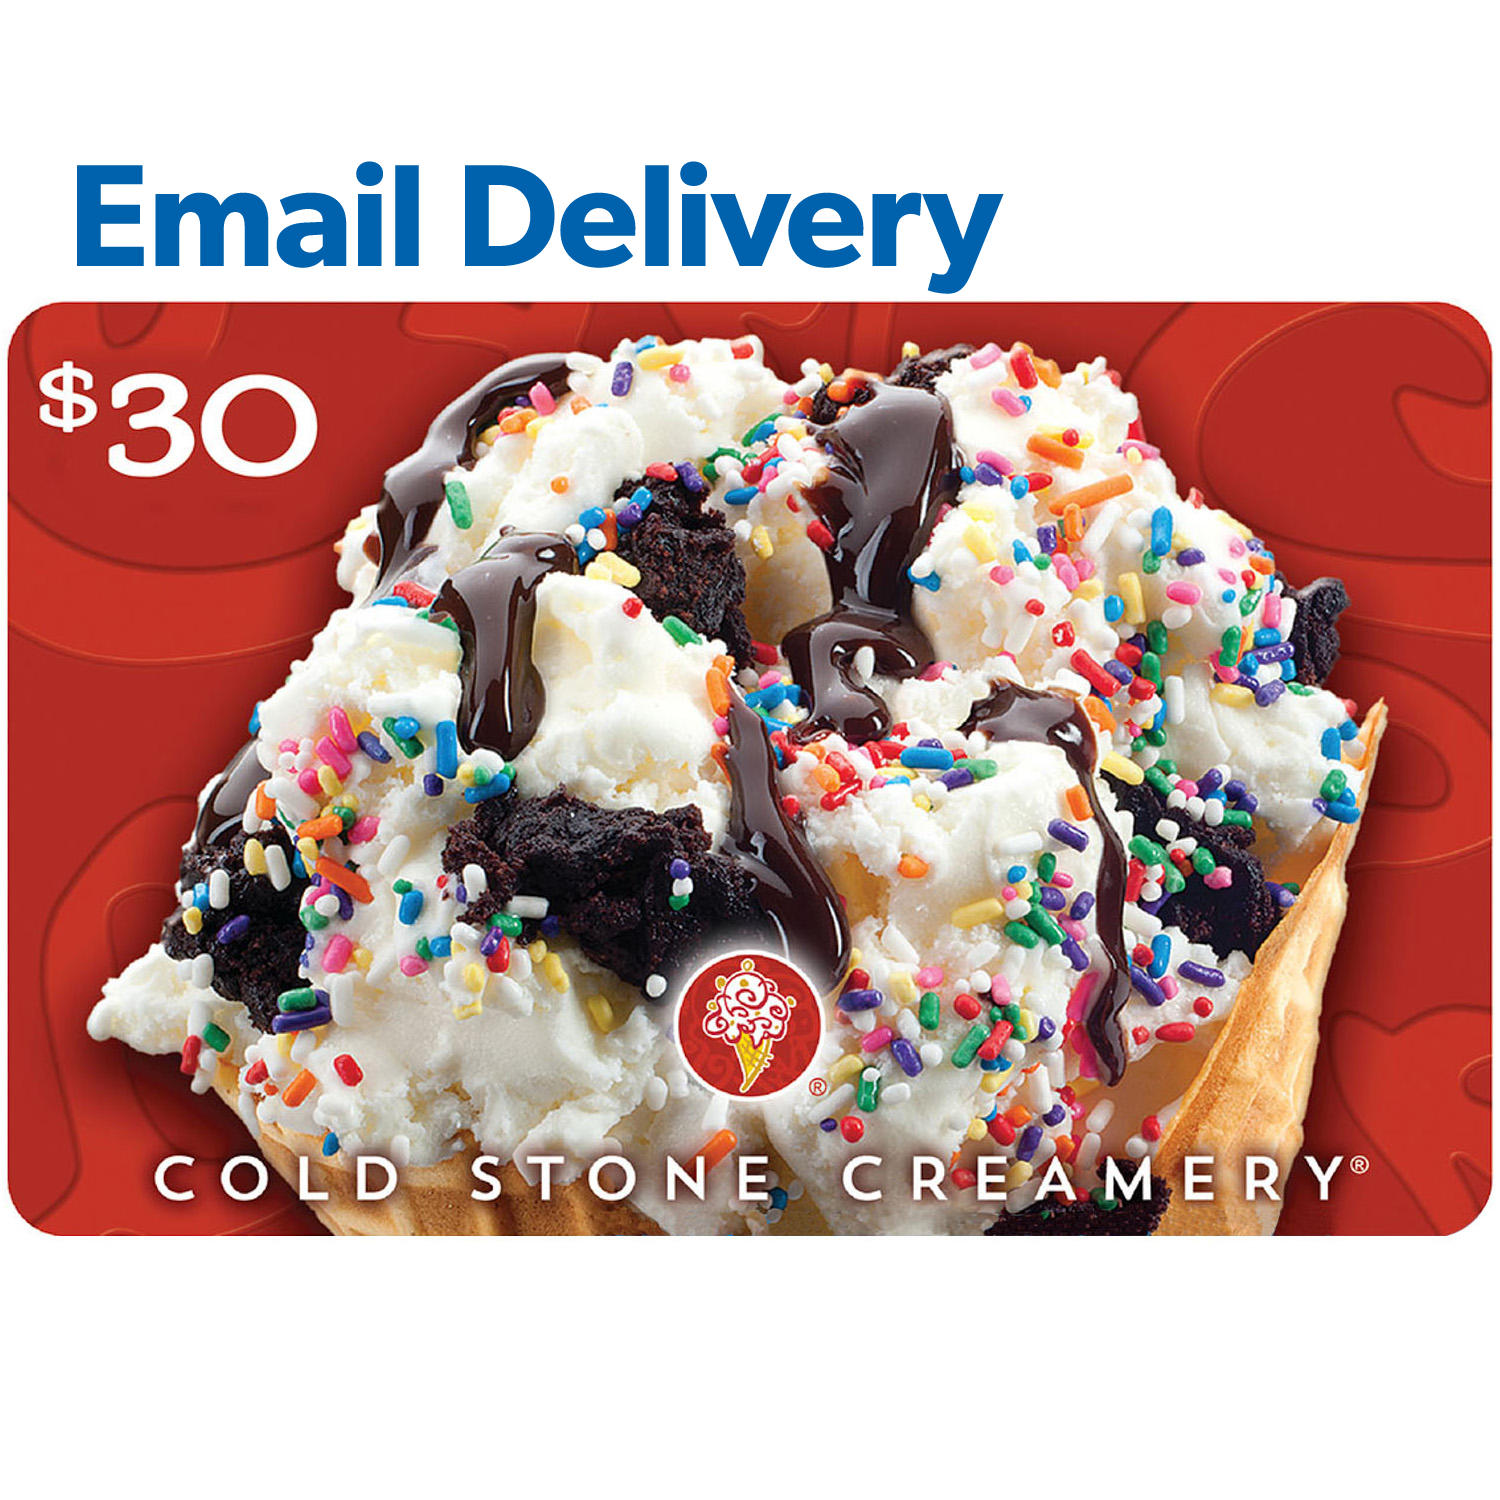 Cold Stone Creamery $30 eGift Card